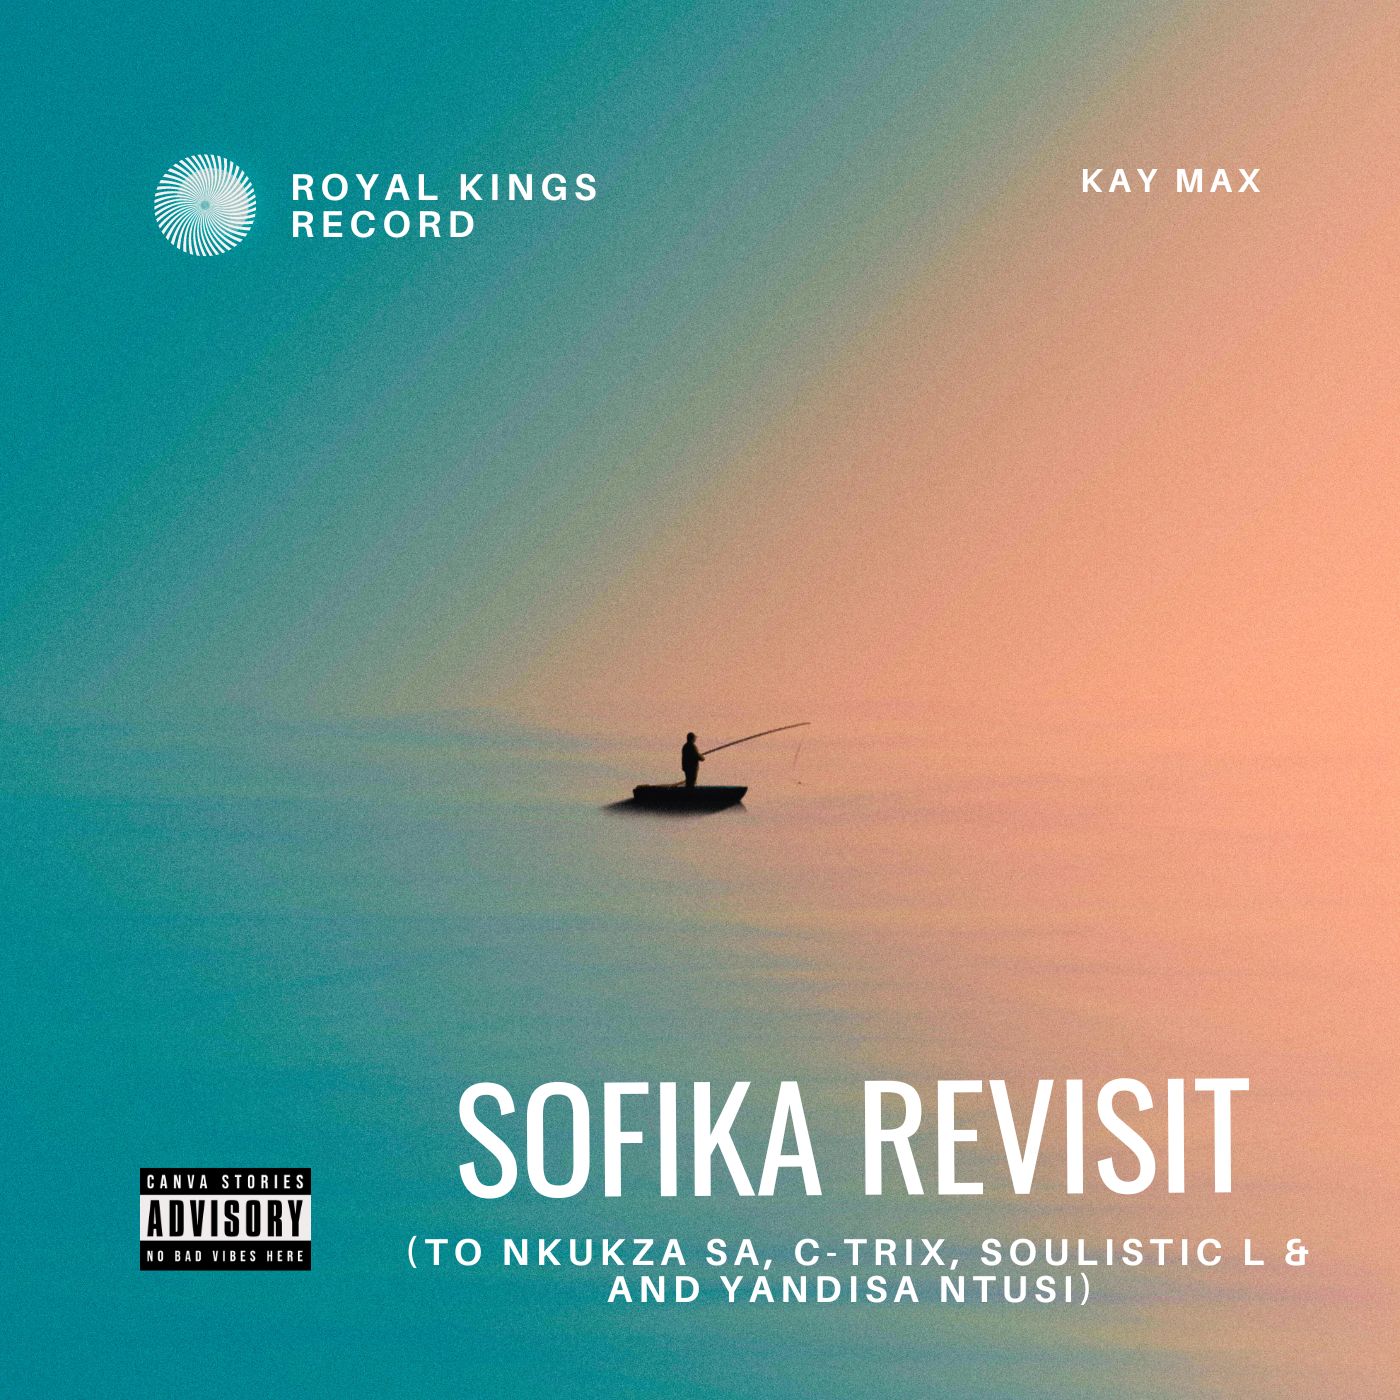 Sofika Revisit (To Nkukza SA, C-TRIX, Soulistic L & And Yandisa Ntusi) - Kay Max